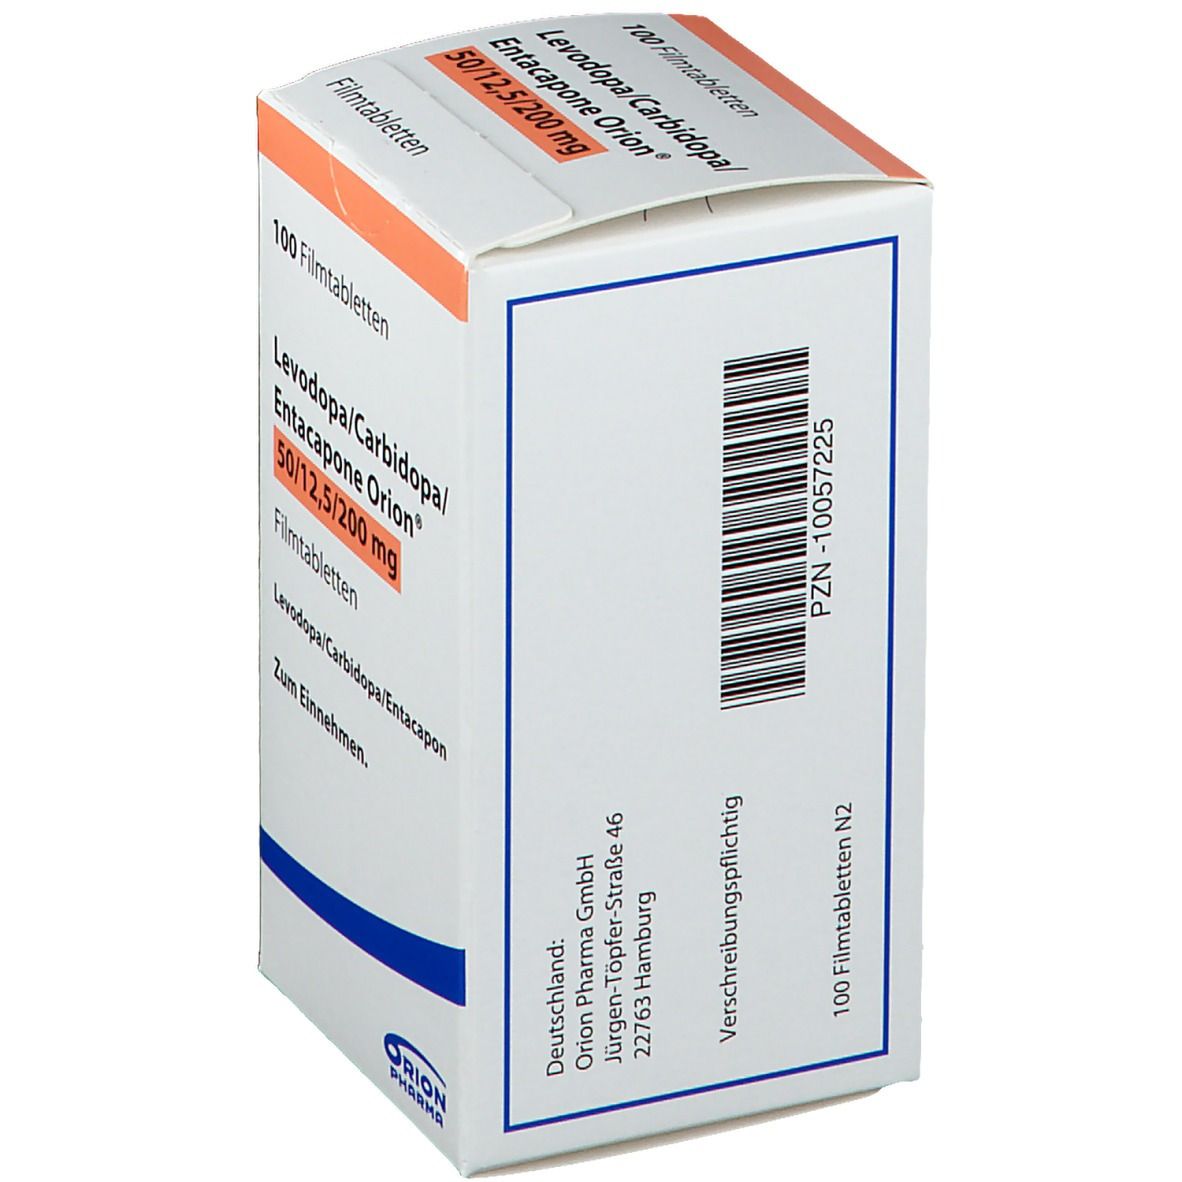 Levodopa/Carbidopa/Entacapone Orion® 50 mg/12,5 mg/200 mg